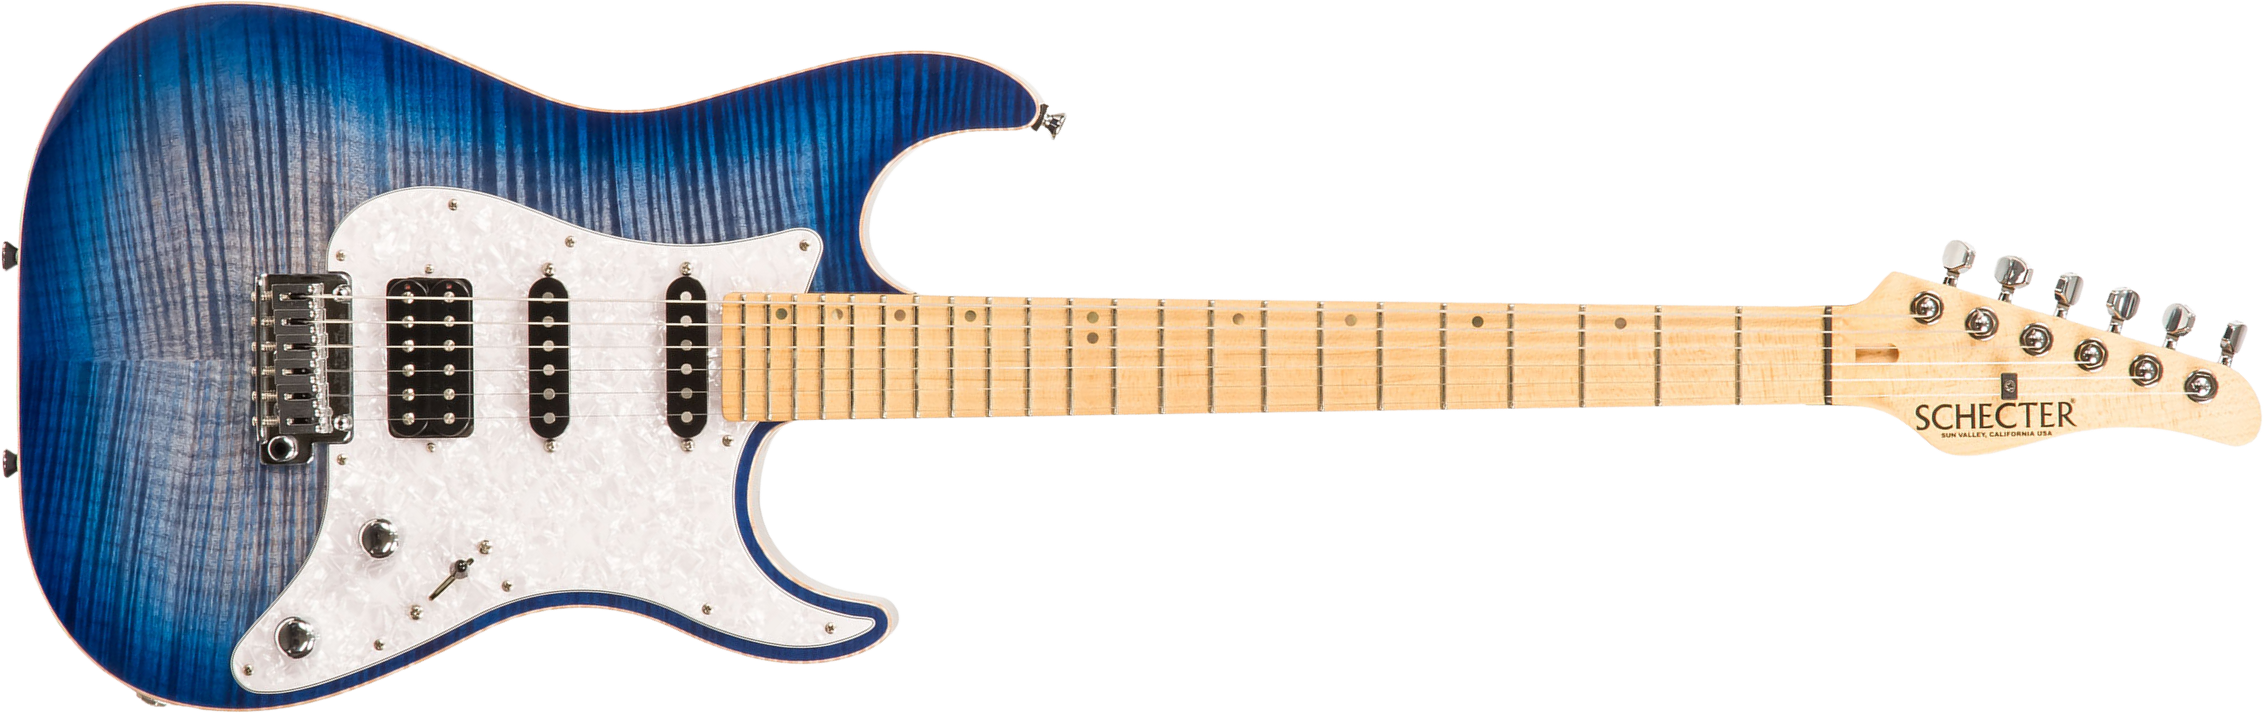 Schecter Custom Shop Sunset Usa Hss Trem Mn #1409001 - Trans Sky Blue - E-Gitarre in Str-Form - Main picture